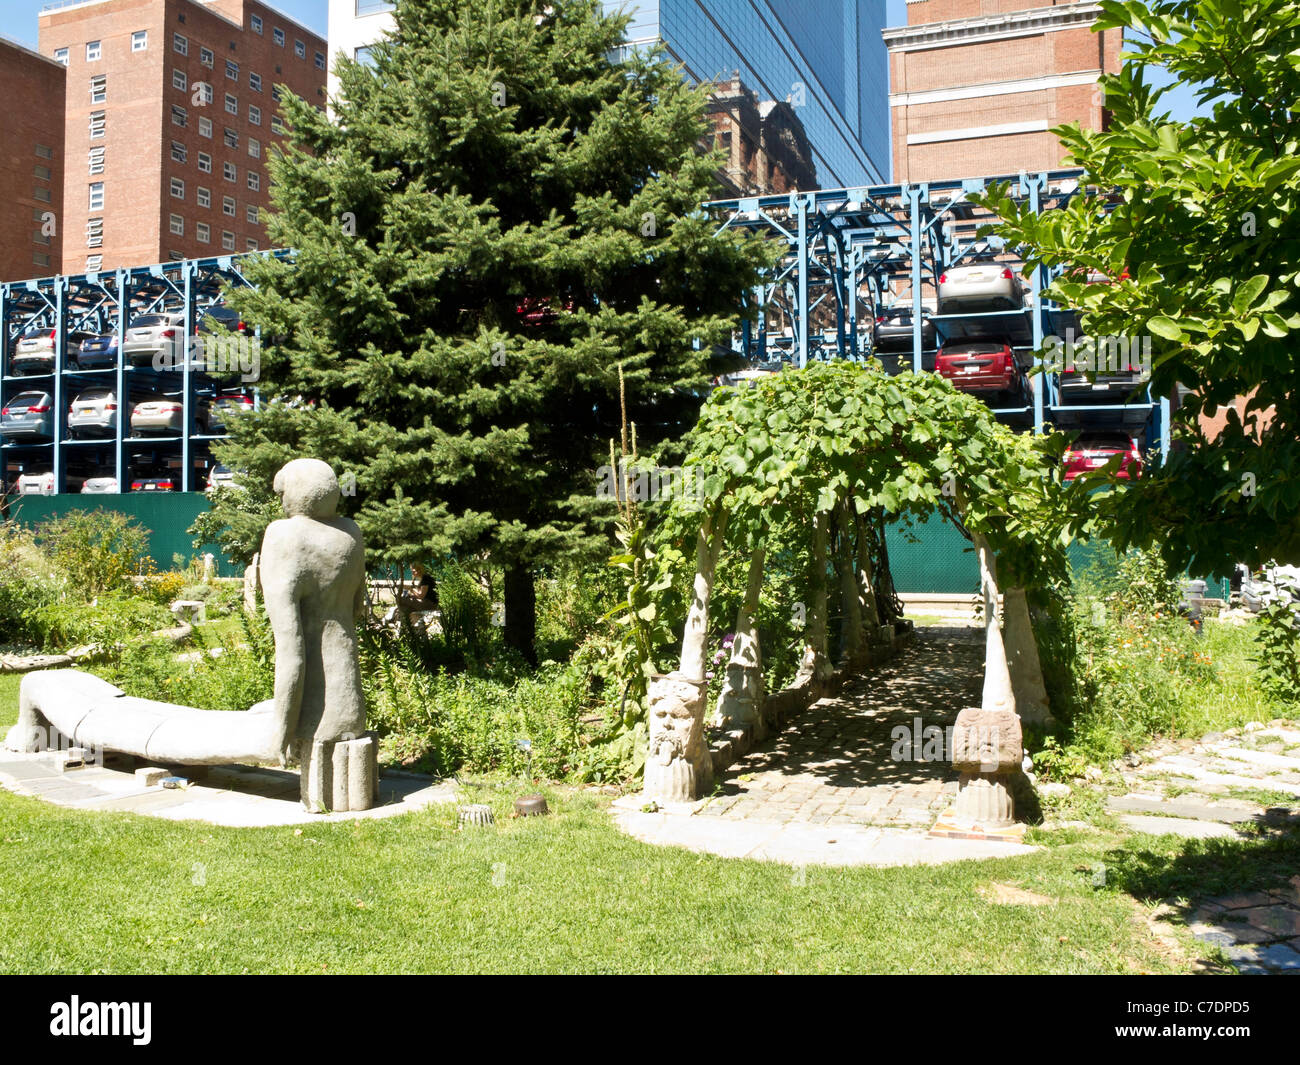 Garden Statues and Archway,Urban Garden, Parking Storage, NYU Medical Center, NYC Stock Photo